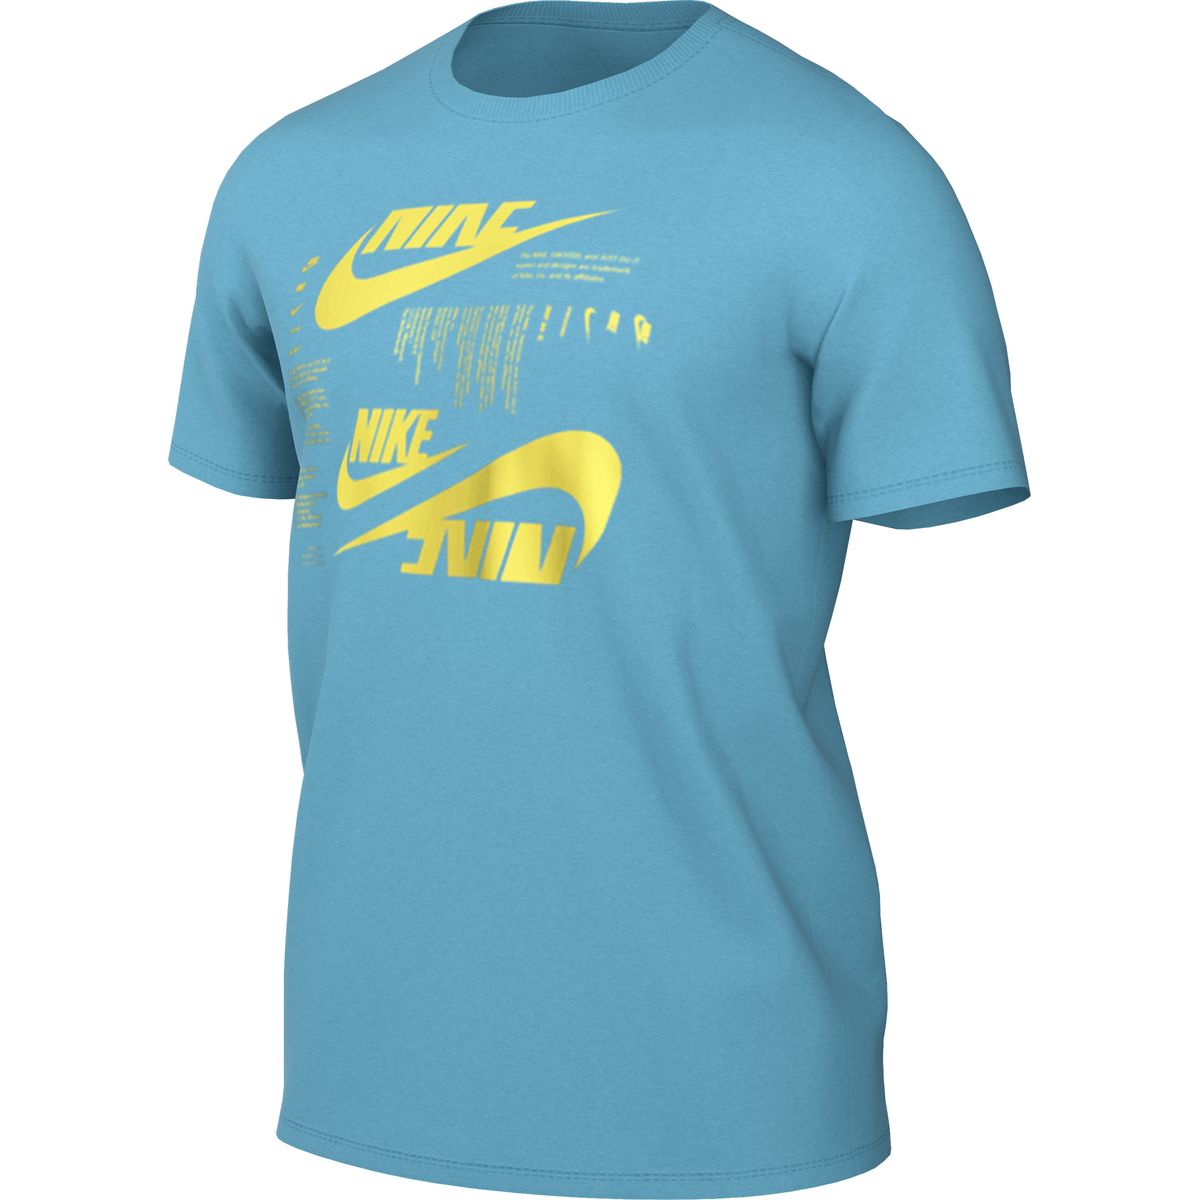 Nike Sportswear Herren T-Shirt